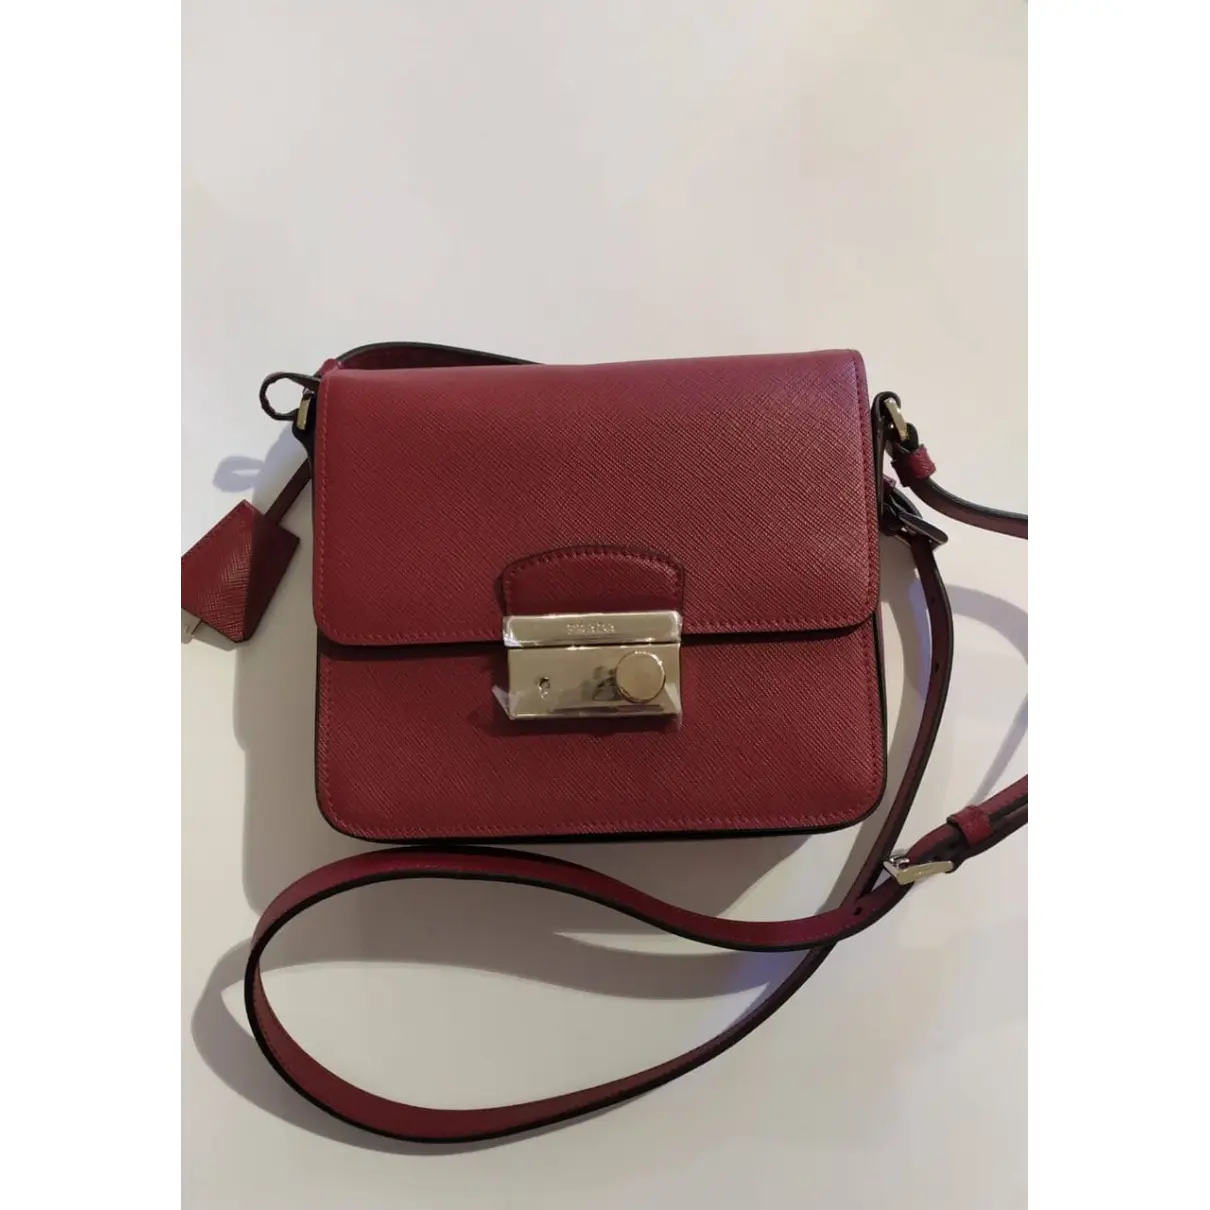 Buy Prada Sound leather handbag online